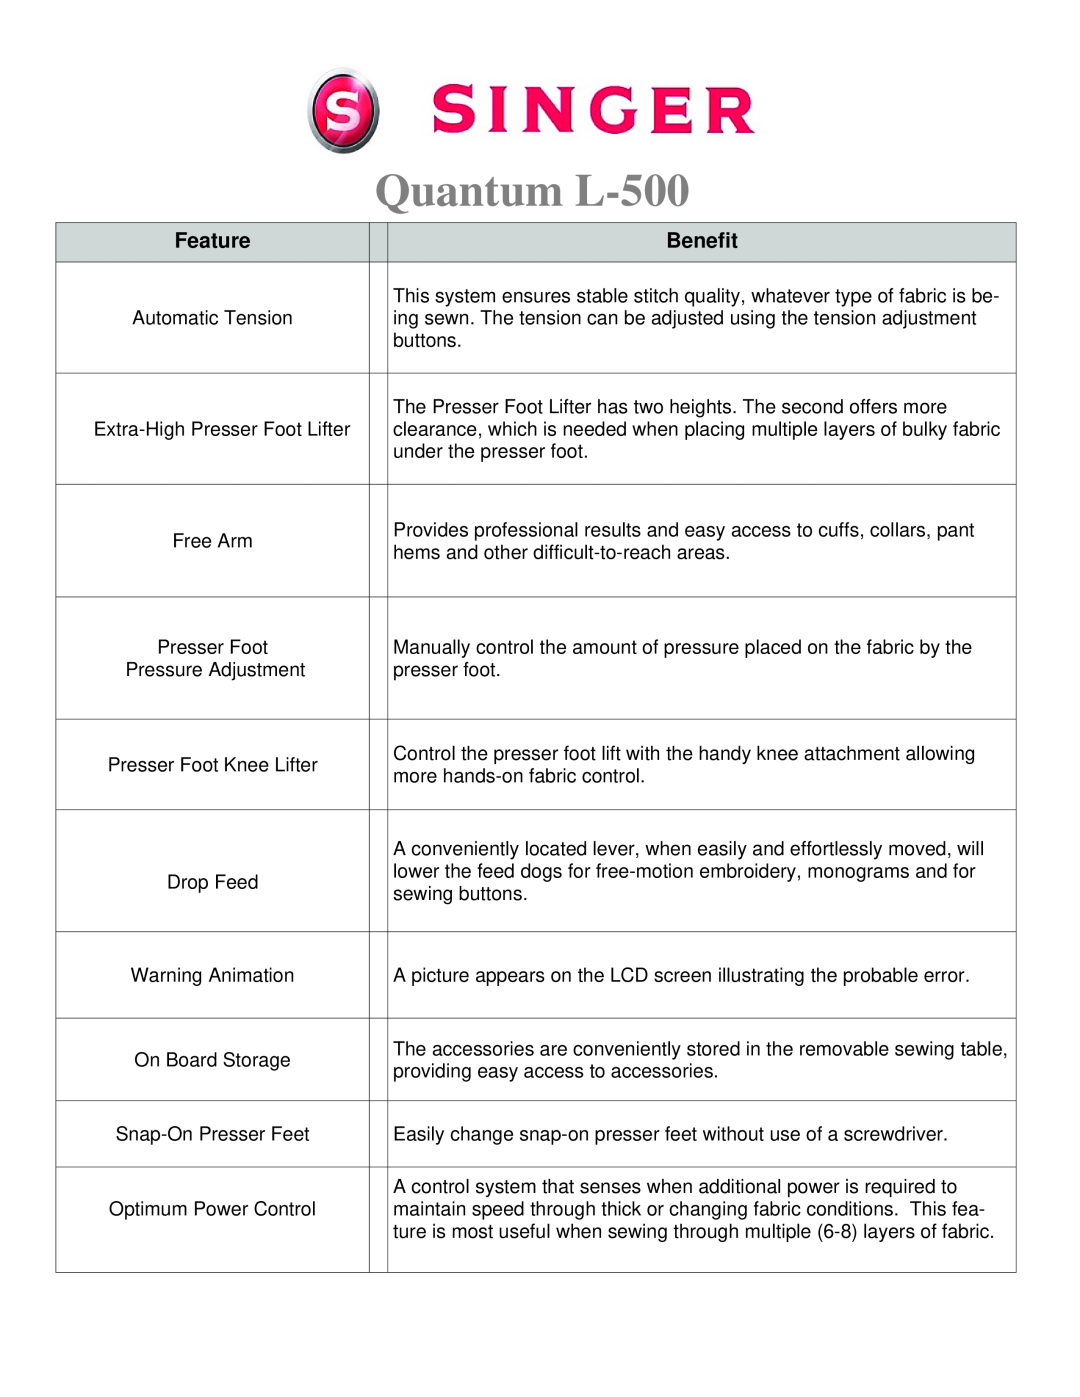 Singer manual Quantum L-500, Benefit, Feature, Automatic Tension 